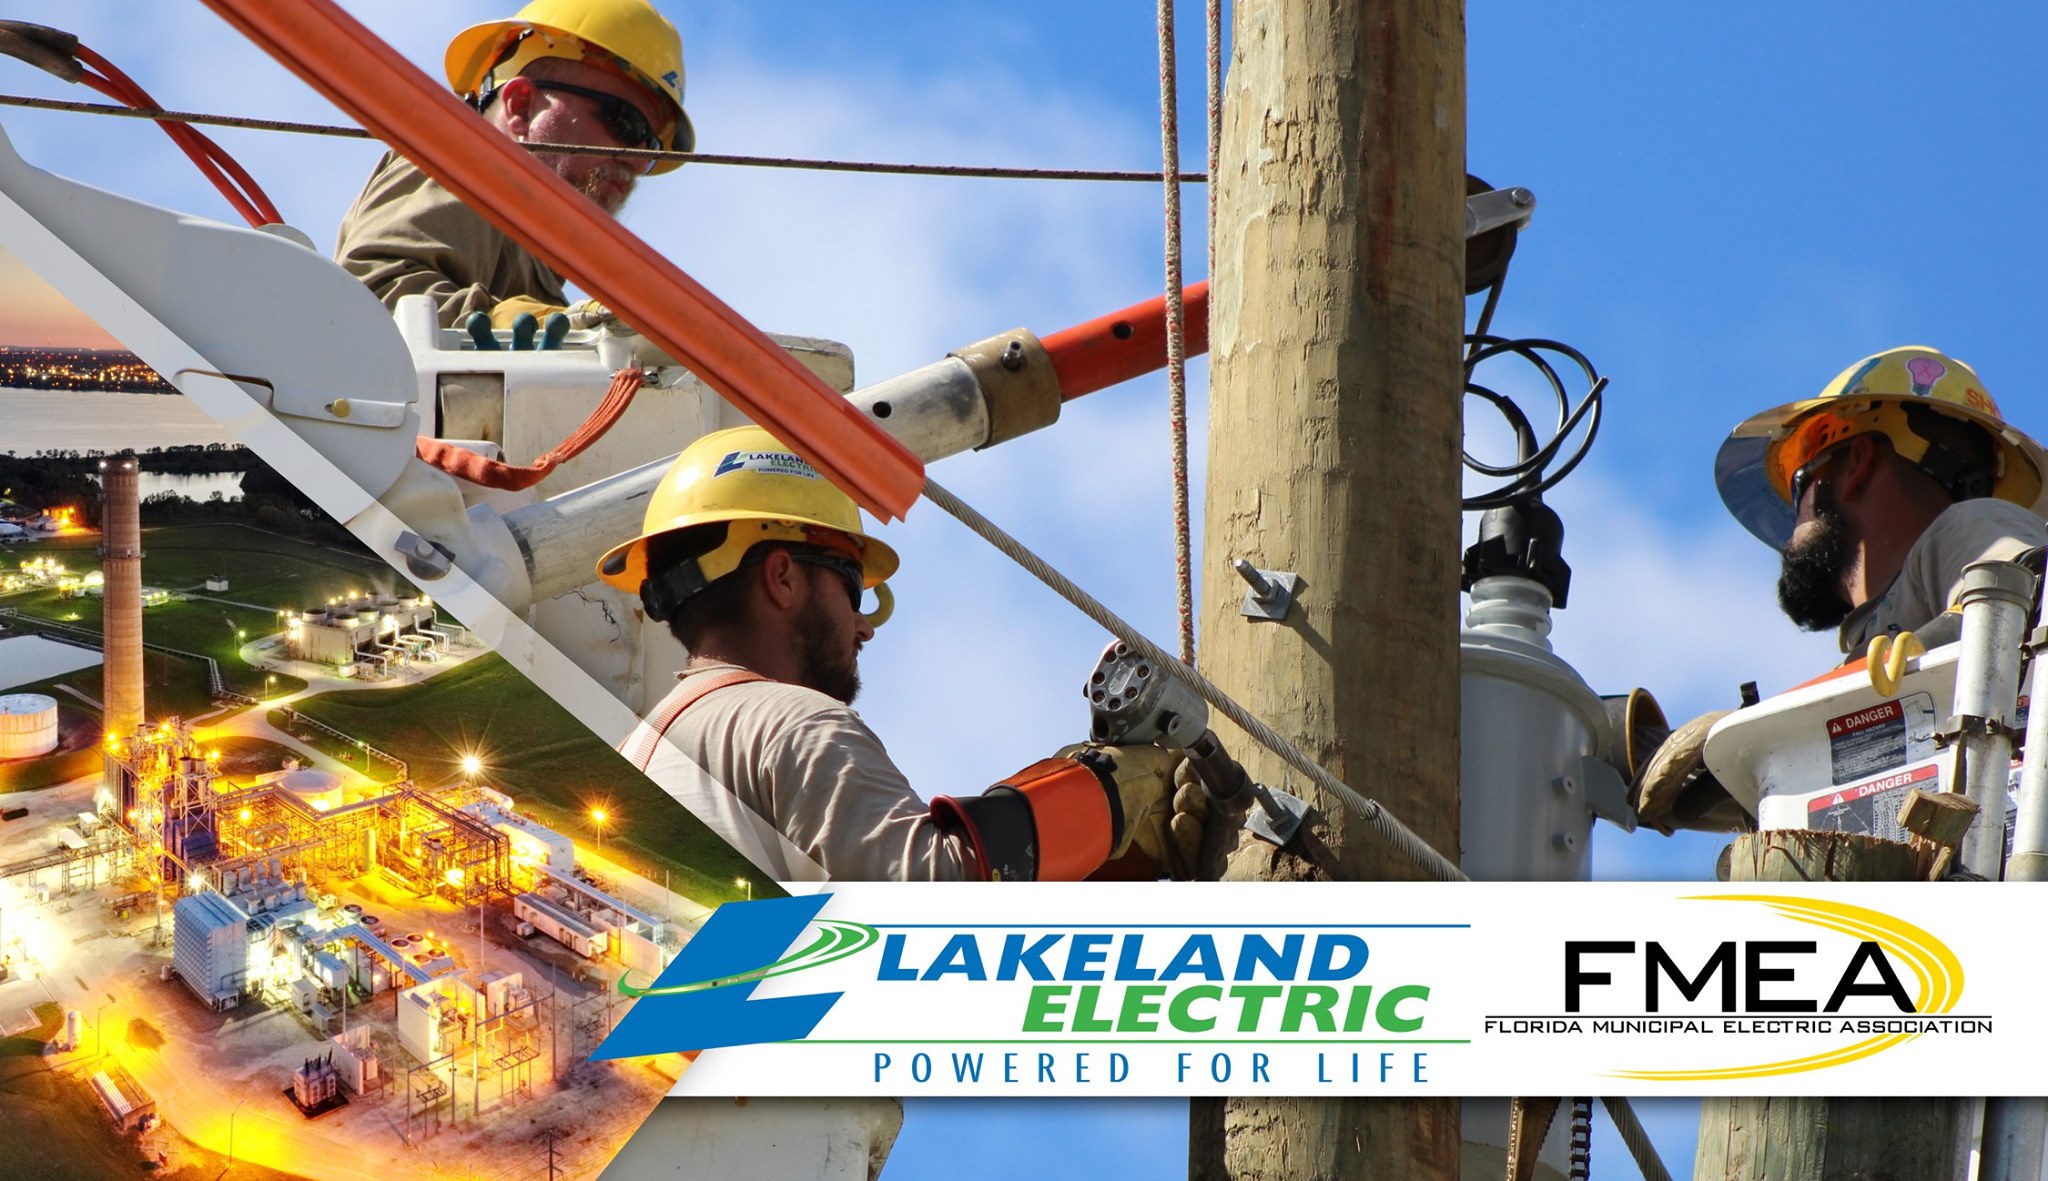 lakeland-electric-received-florida-municipal-electric-association